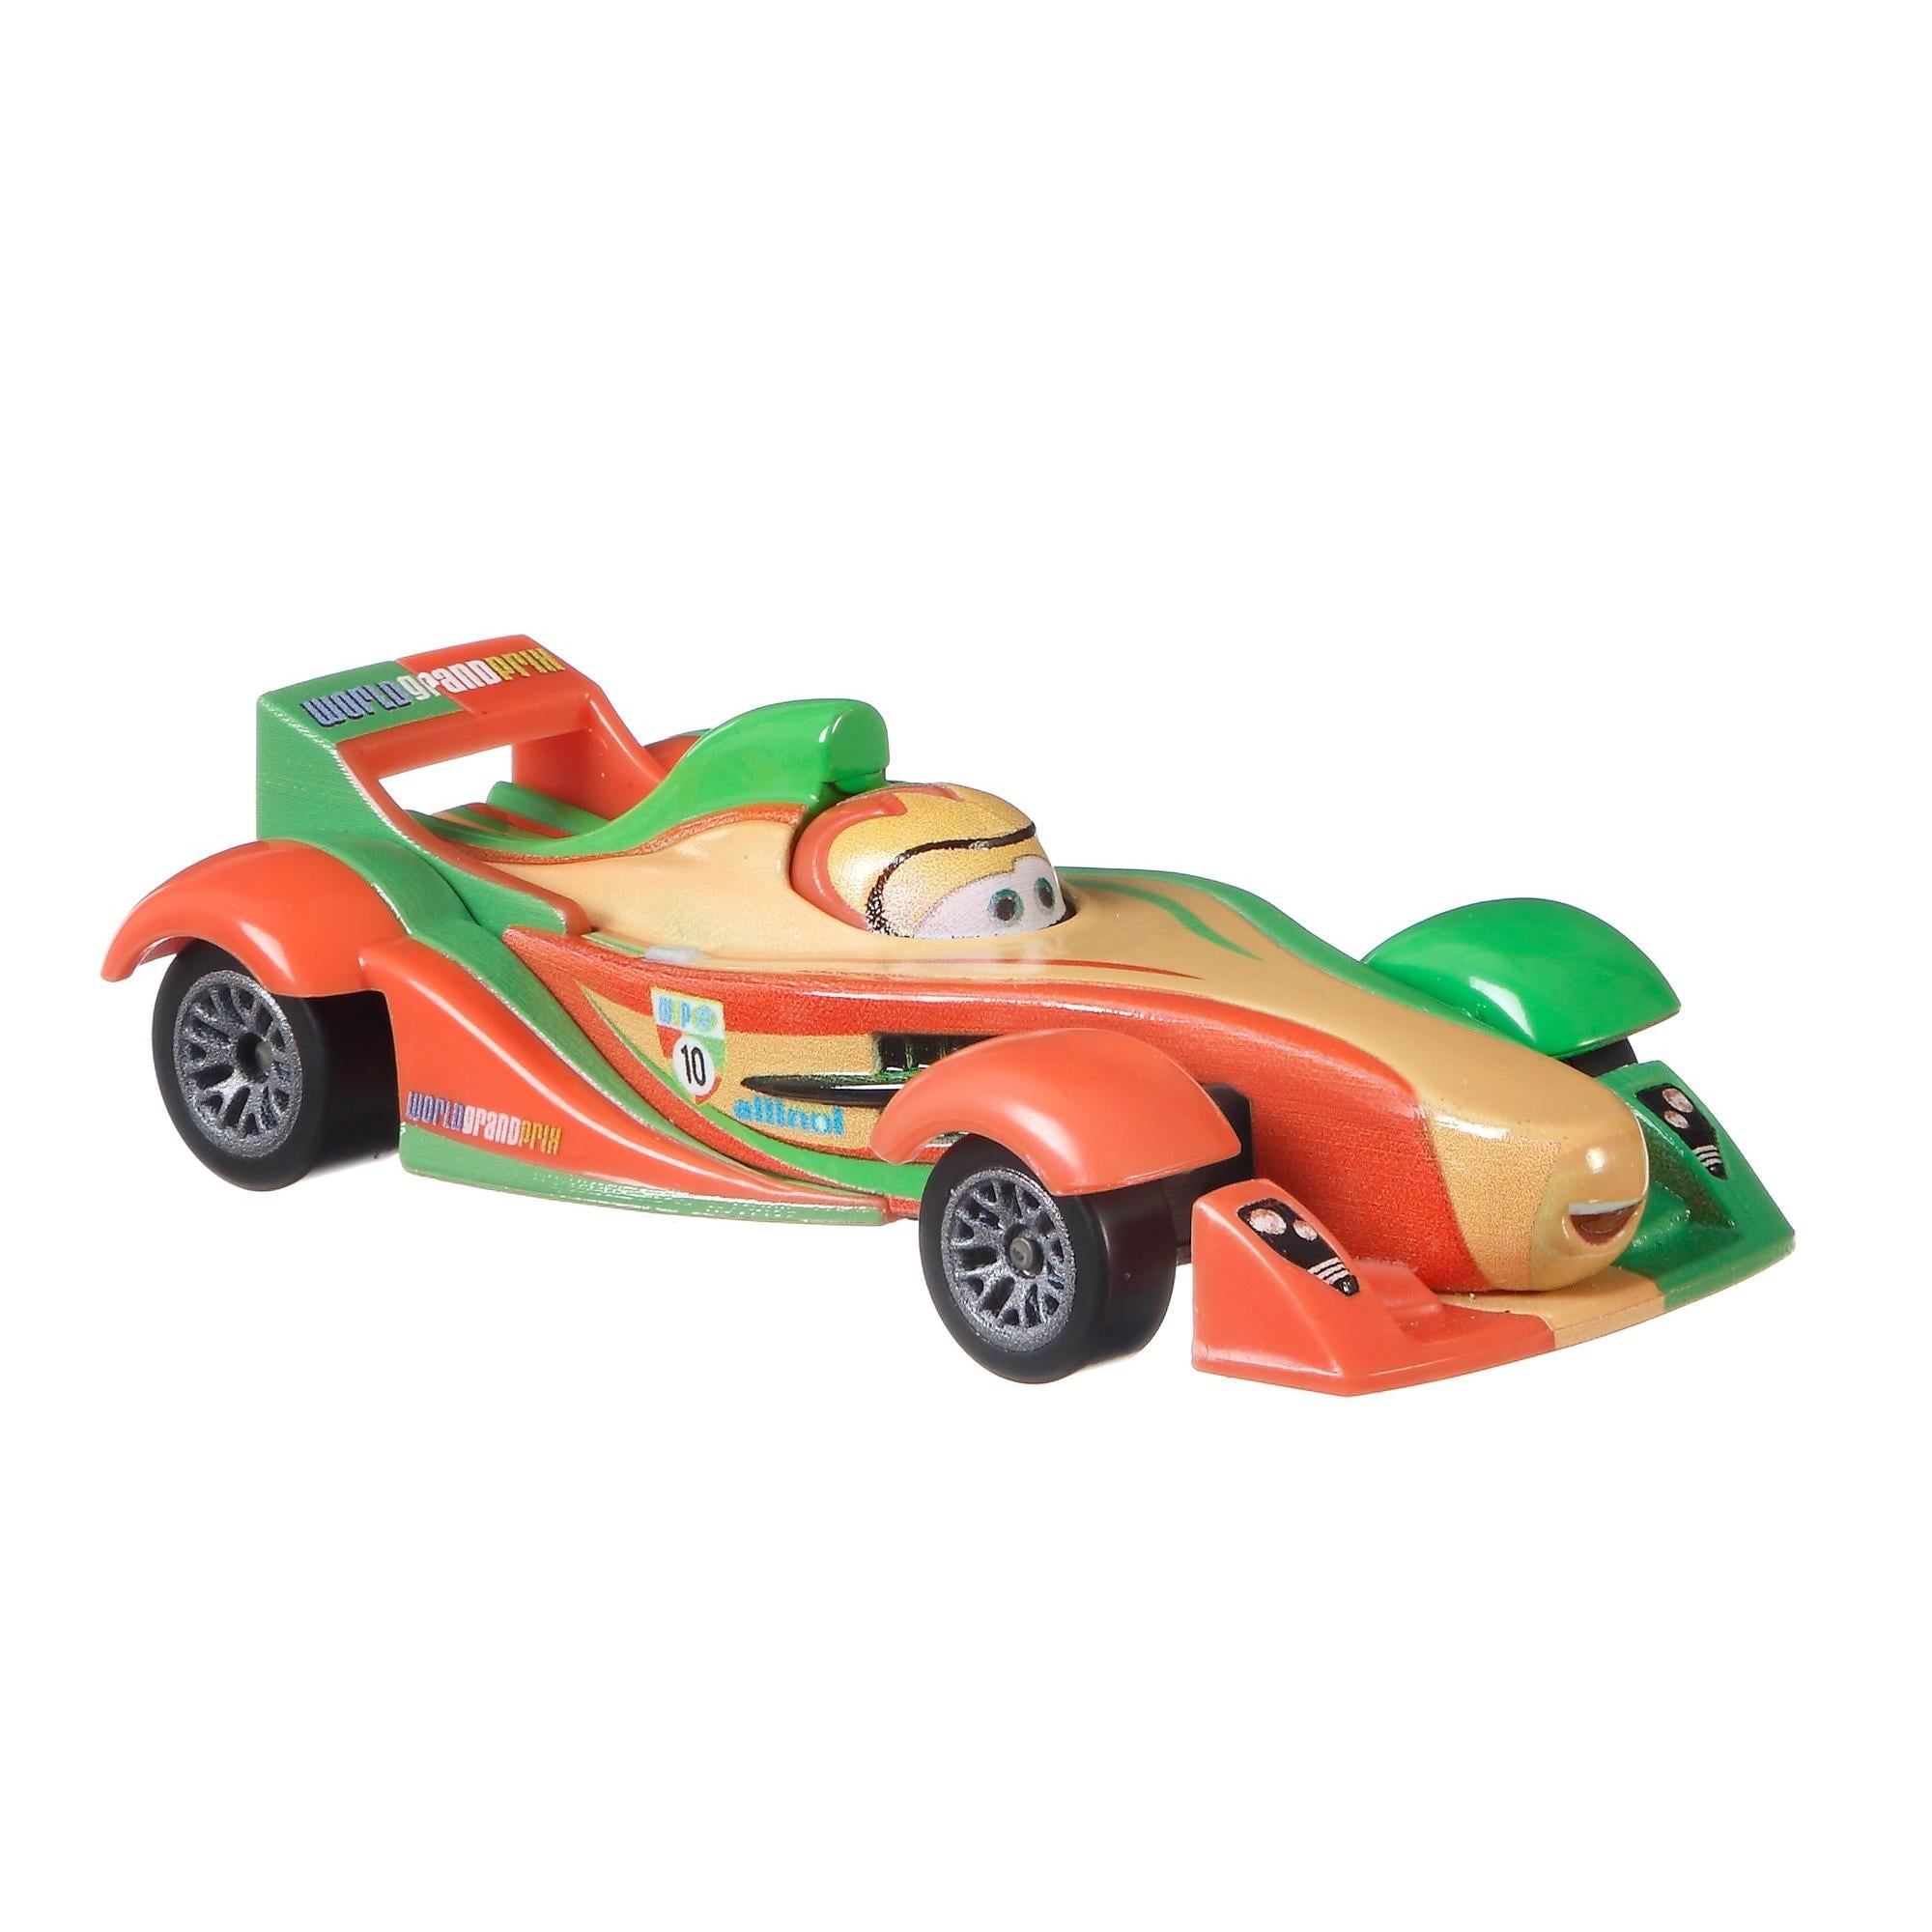 Mattel Disney Pixar Cars Rip Clutchgoneski Diecast Toys 1:55 Metal Car Loose New 